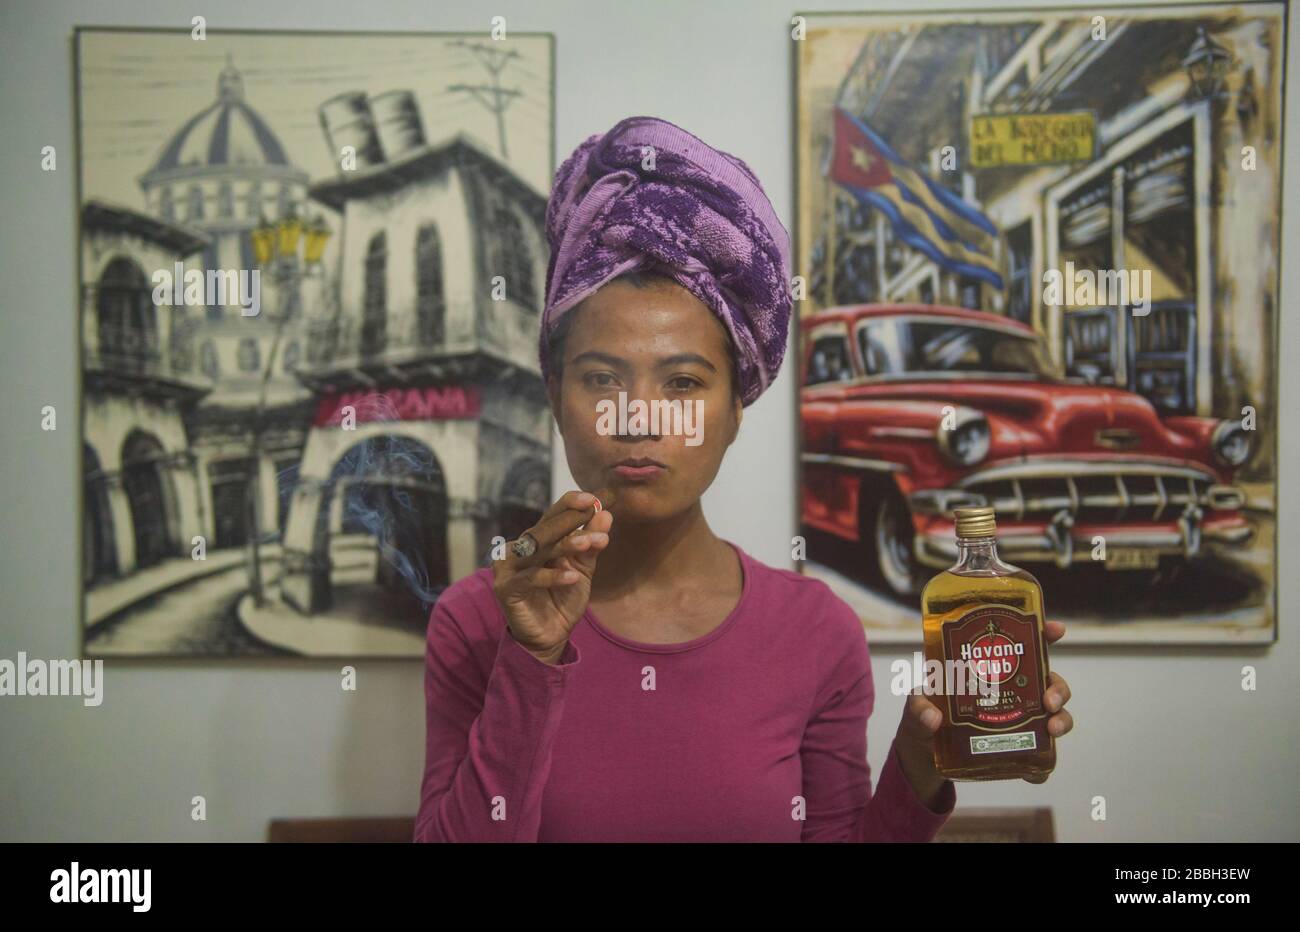 Genießen Sie Havanna Club Rum und kubanische Zigarre vor El Bodeguito Painting, Havanna, Kuba Stockfoto